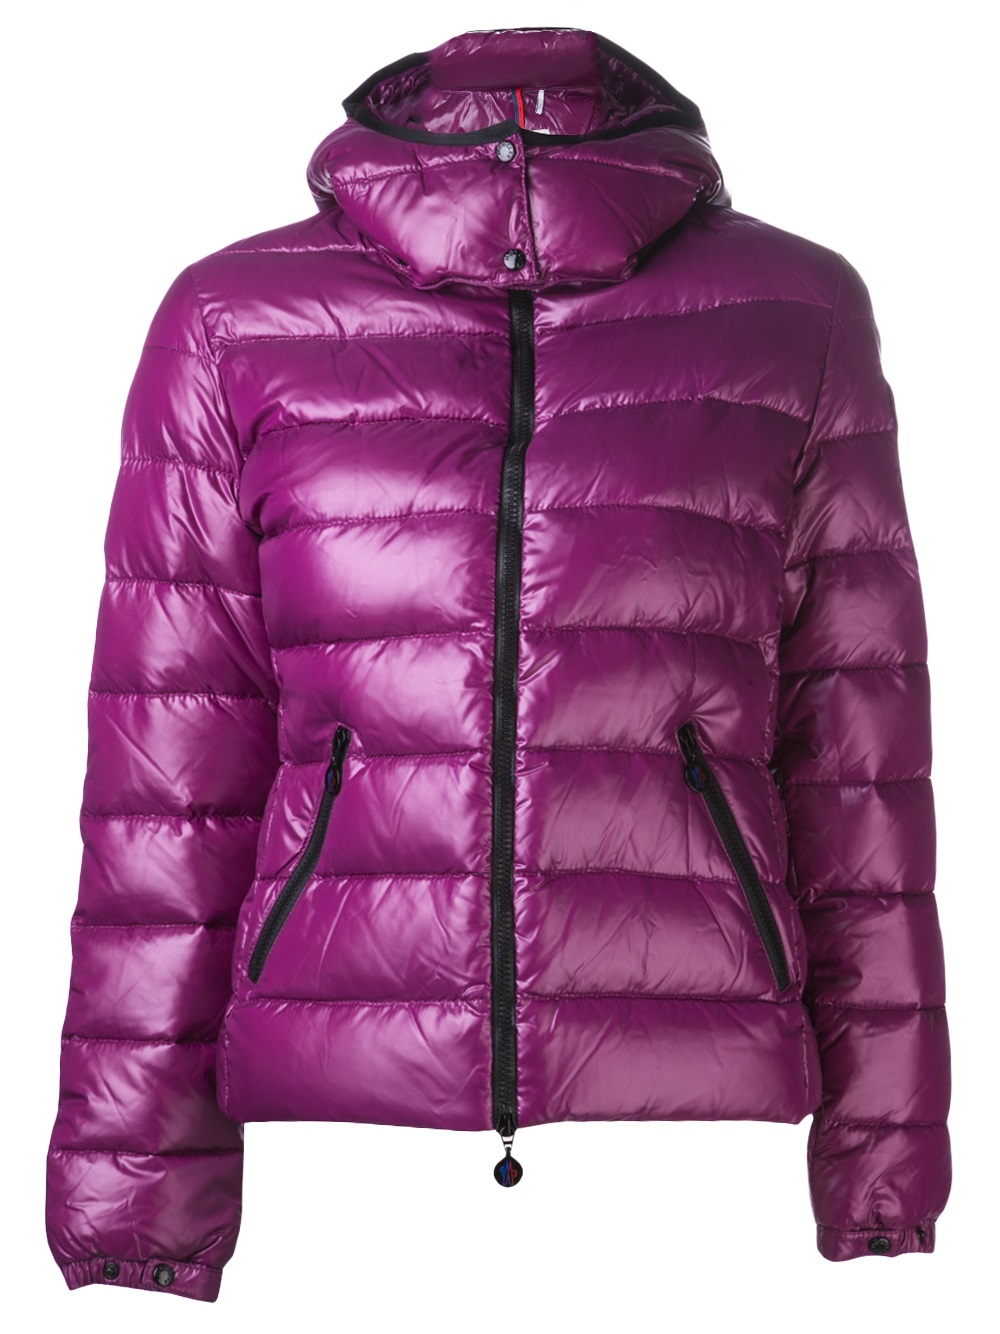 Moncler Bady Shiny Jacket in Pink & Purple (Purple) - Lyst